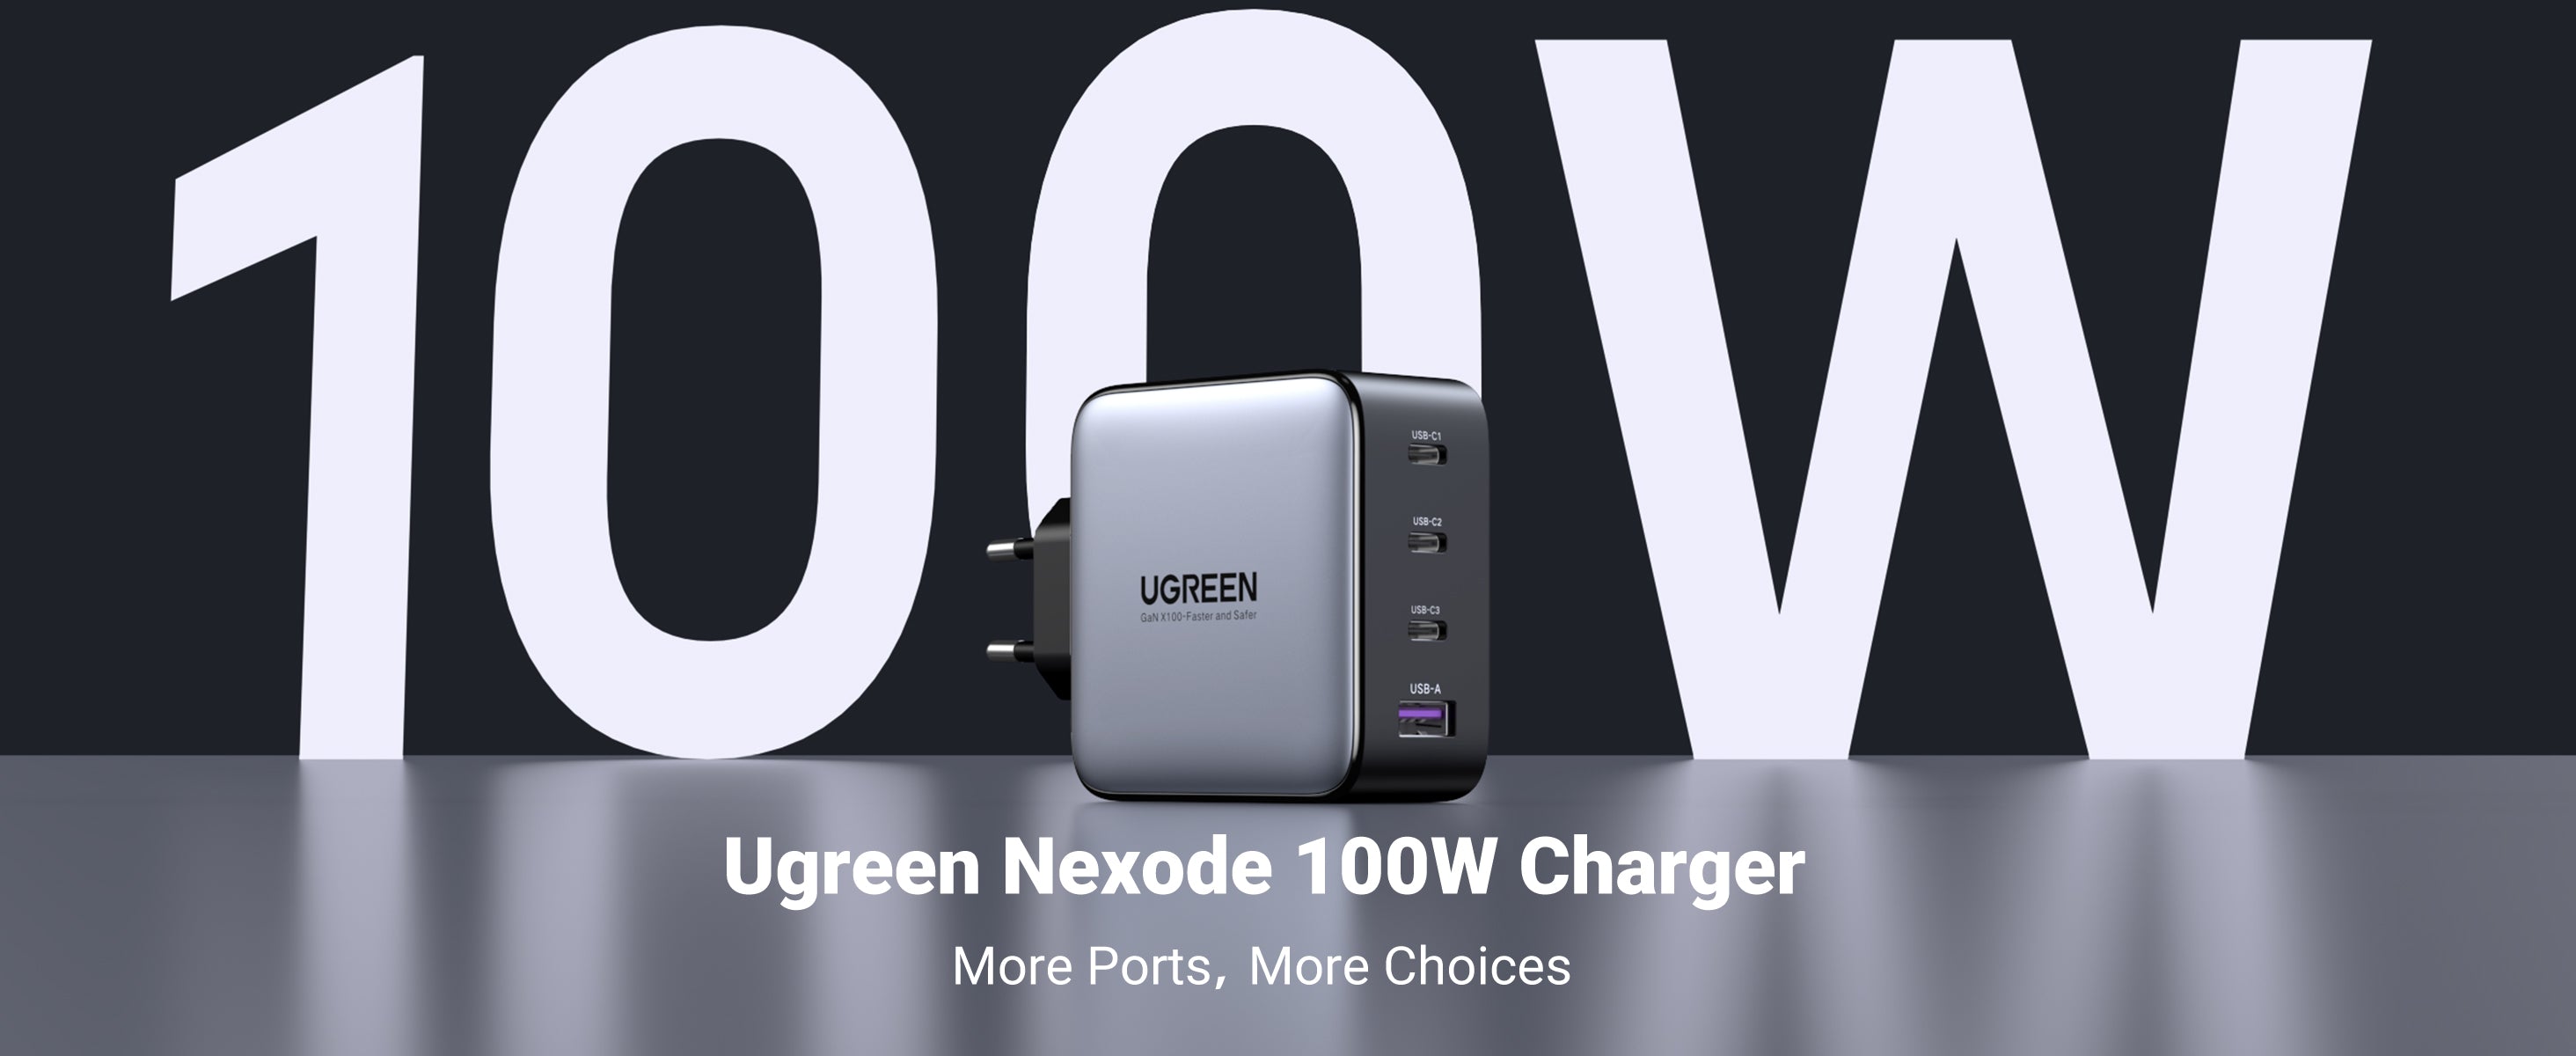 UGREEN 100W Nexode Pro GaN Charger 2023 REVIEW - MacSources